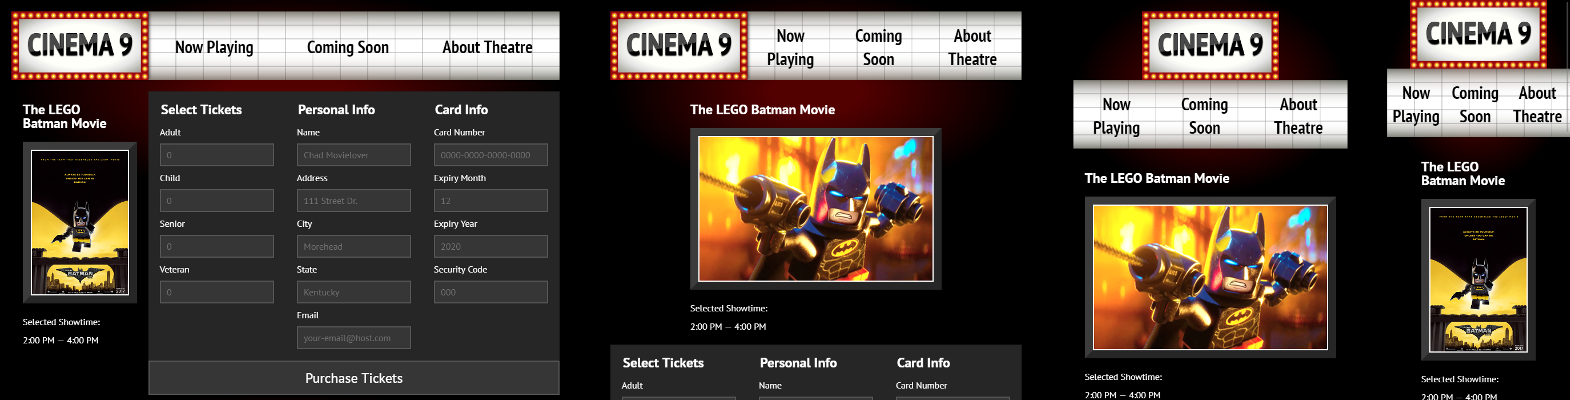 Screenshot of Cinema 9 website in various sizes